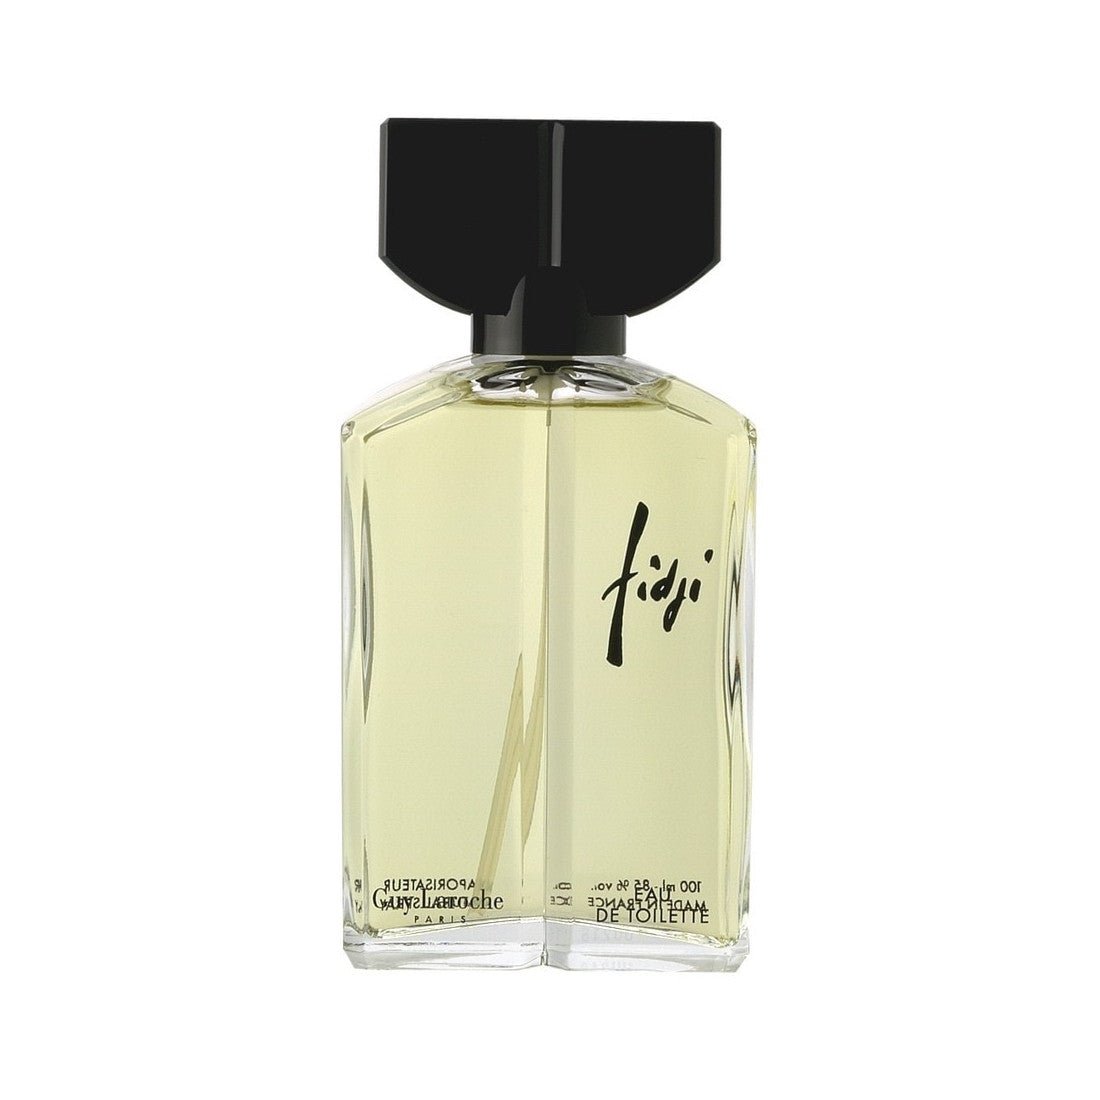 Guy Laroche Fidji Edt For Women Spray 100 ml-Perfume - AllurebeautypkGuy Laroche Fidji Edt For Women Spray 100 ml-Perfume